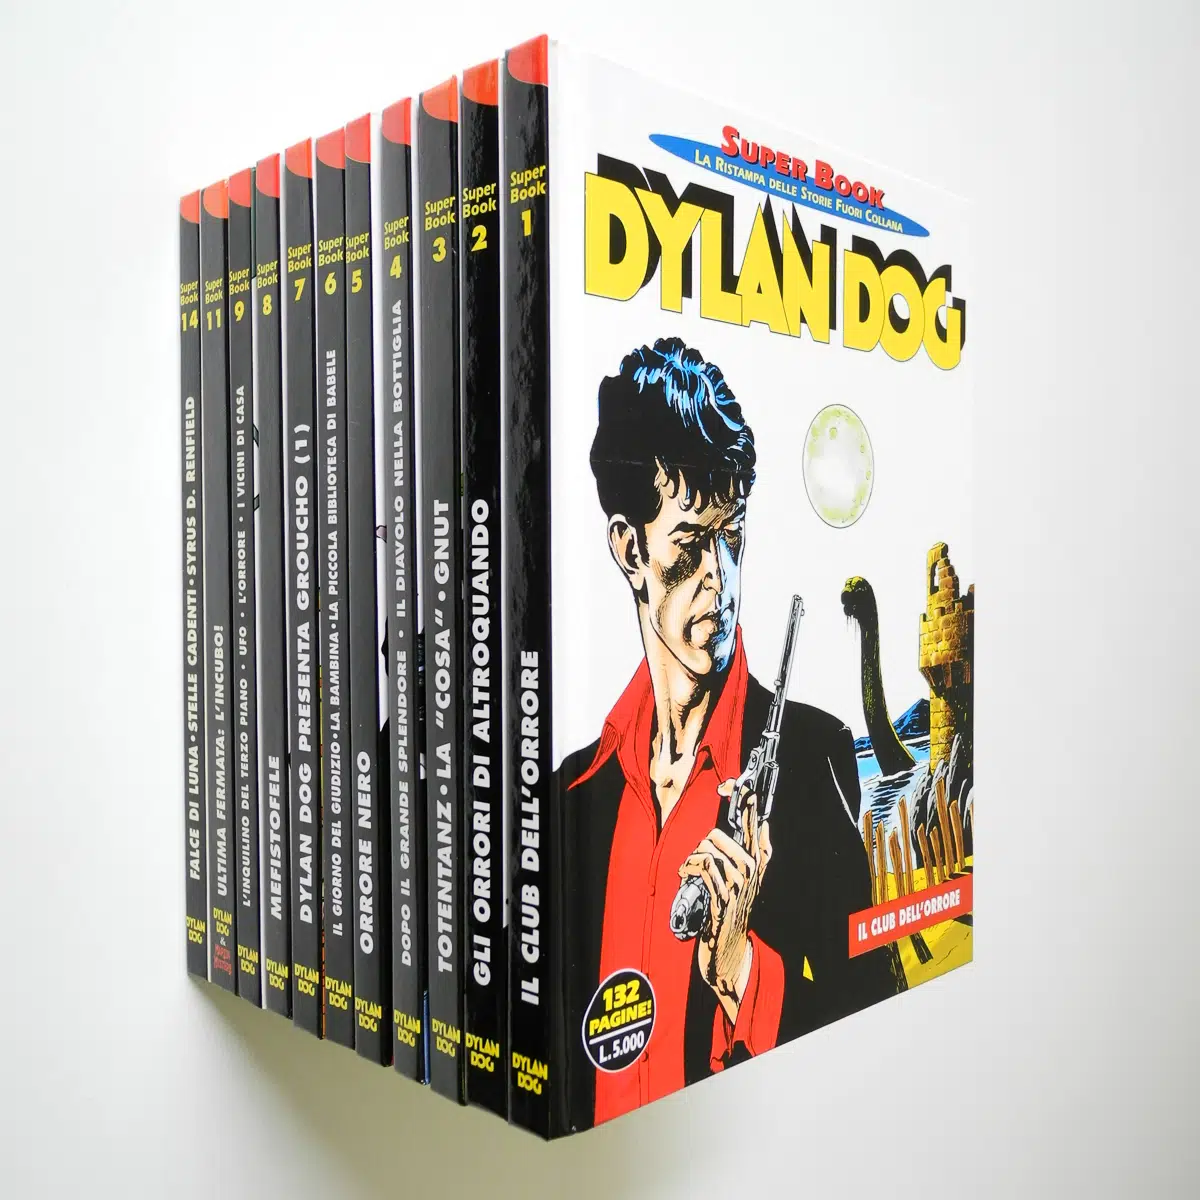  Dylan Dog Super Book sequenza completa n. 1/9, 11, 14 Bonelli